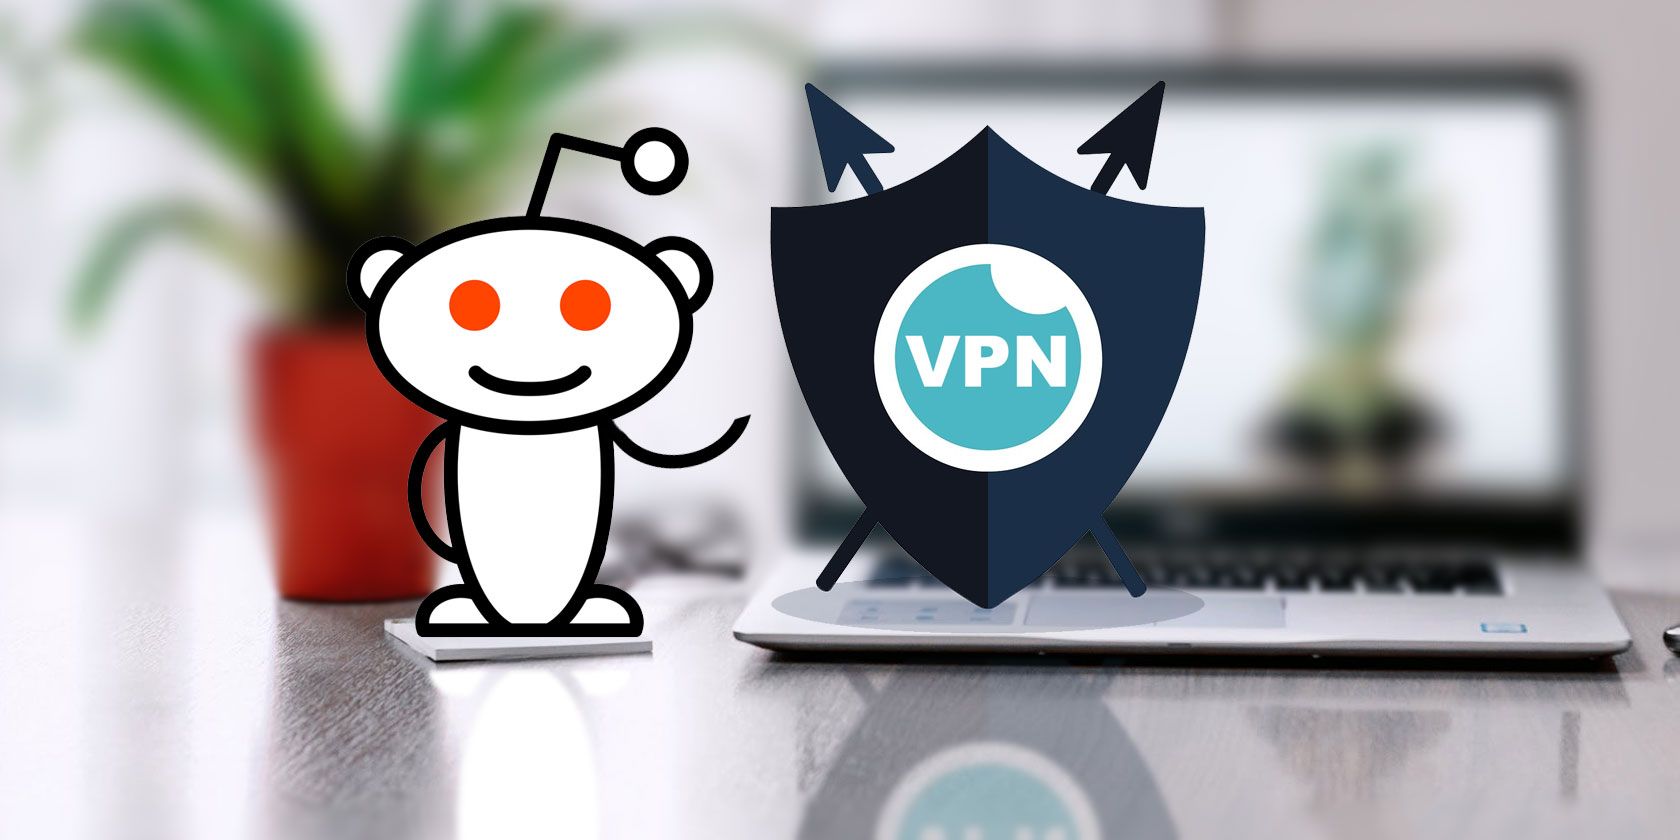 The Best VPN According to Reddit